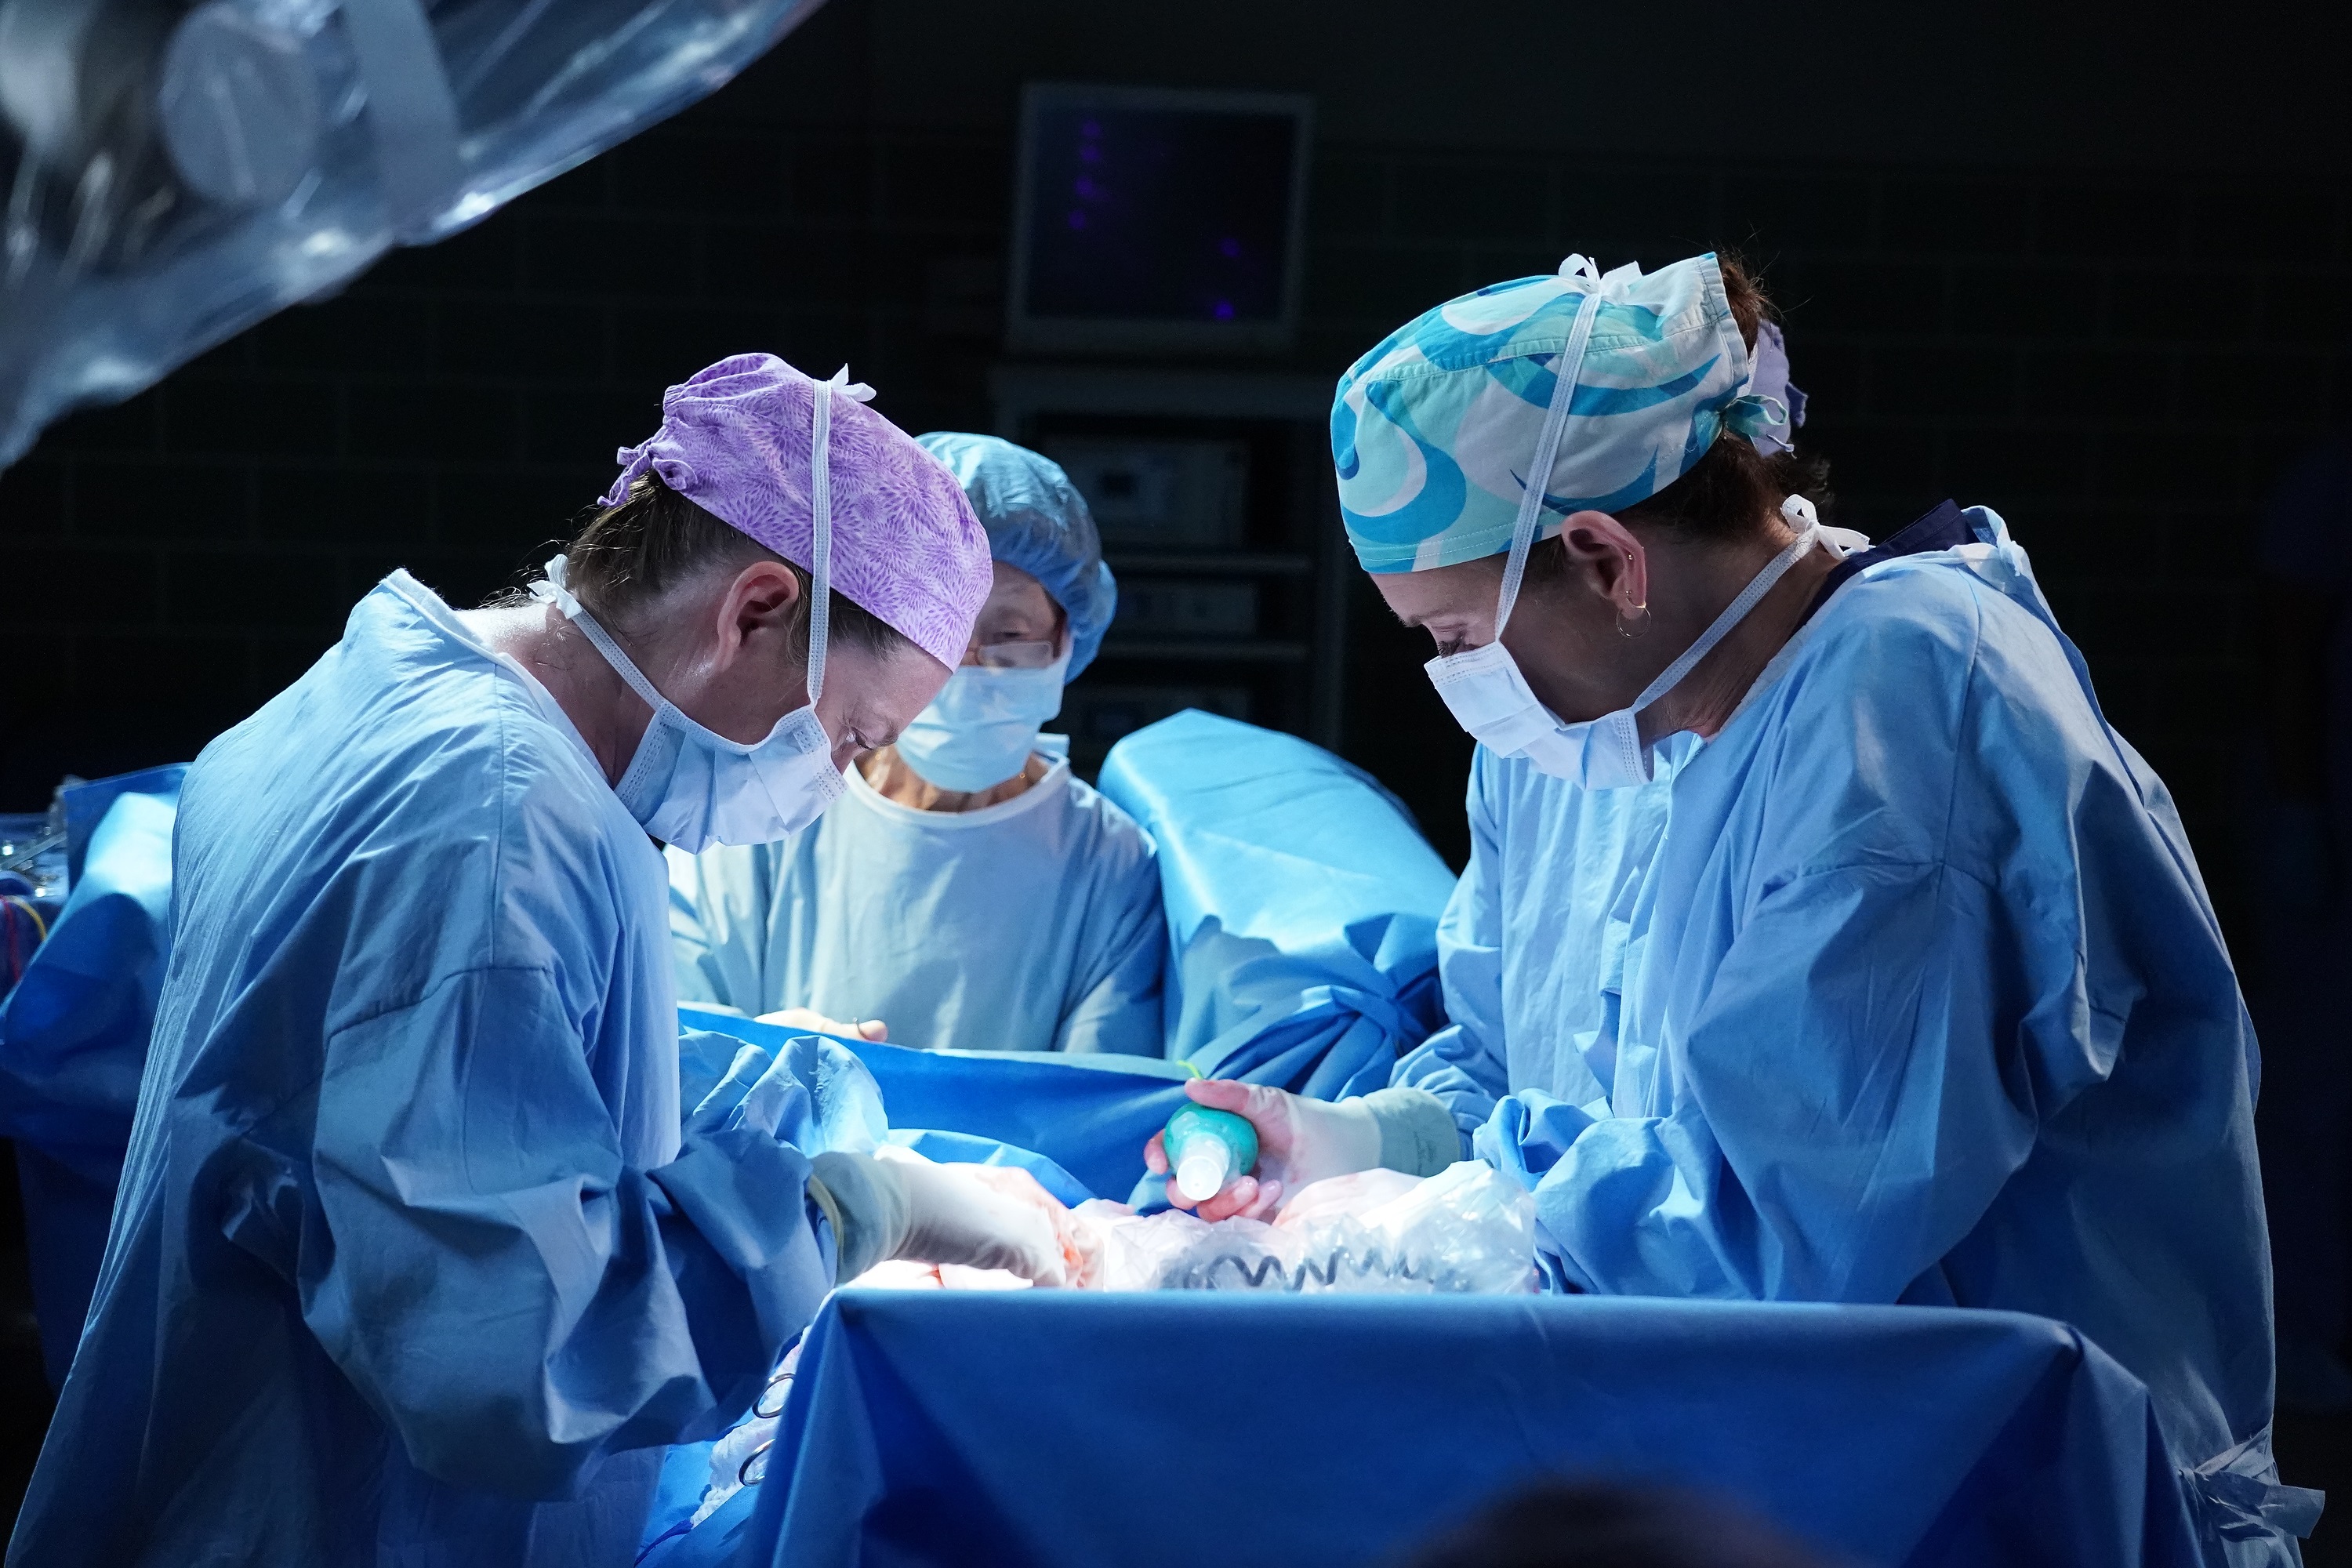 Greys Anatomy Season 18 Episode 3 Addison and Meredith perform surgery together